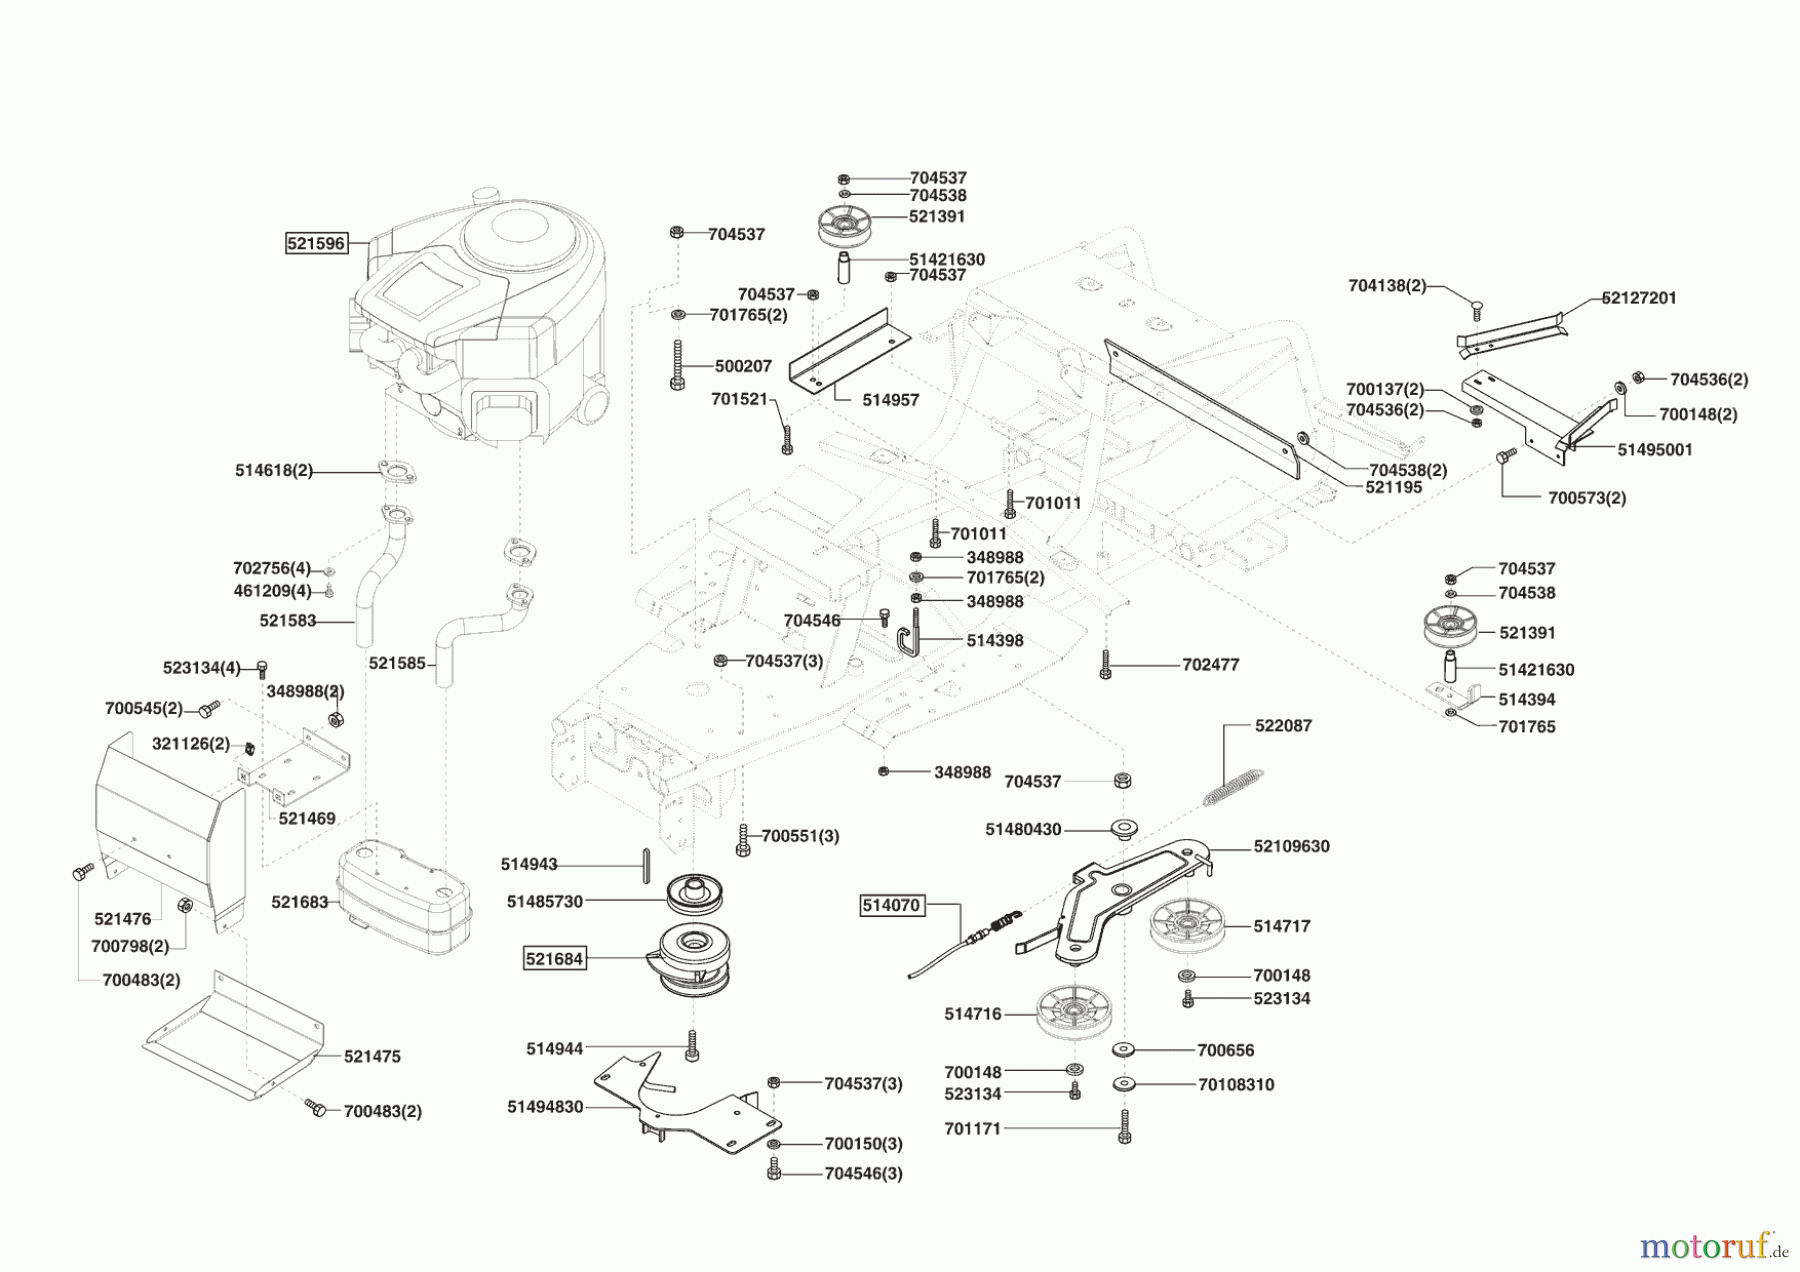  AL-KO Gartentechnik Rasentraktor T18/102HD MARINA Seite 4